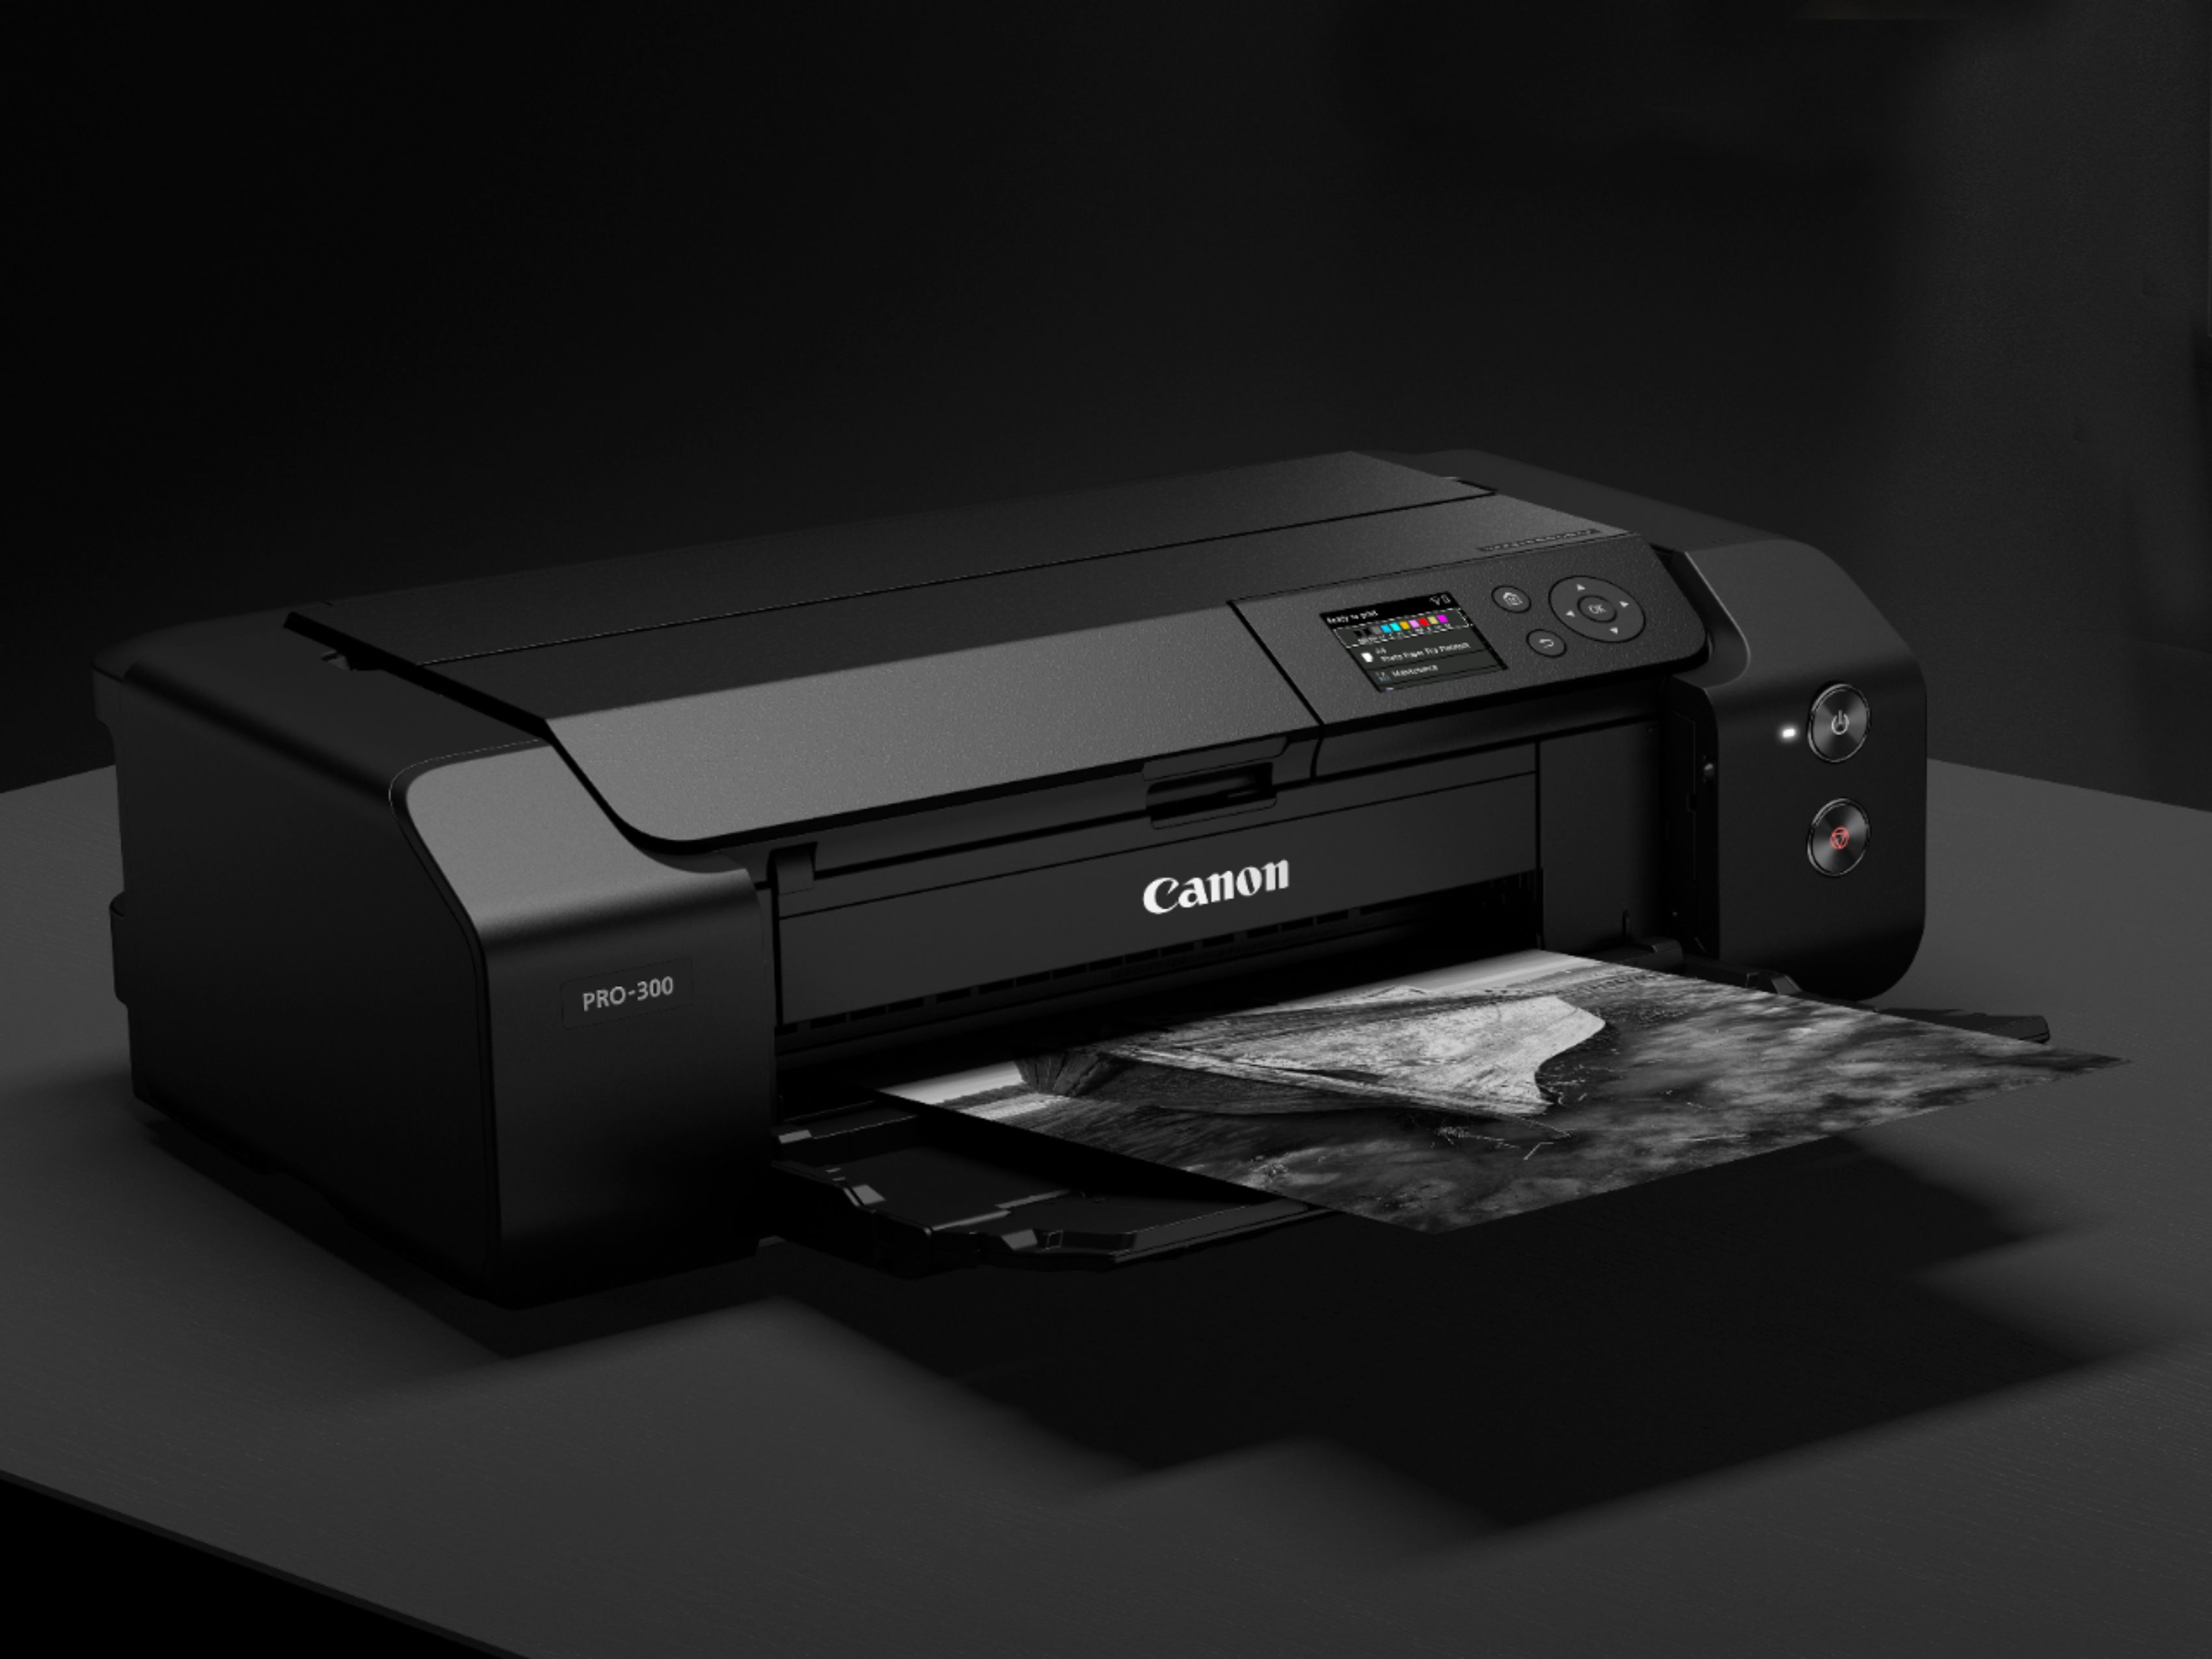 canon-imageprograf-pro-300-wireless-inkjet-printer-black-imageprograf